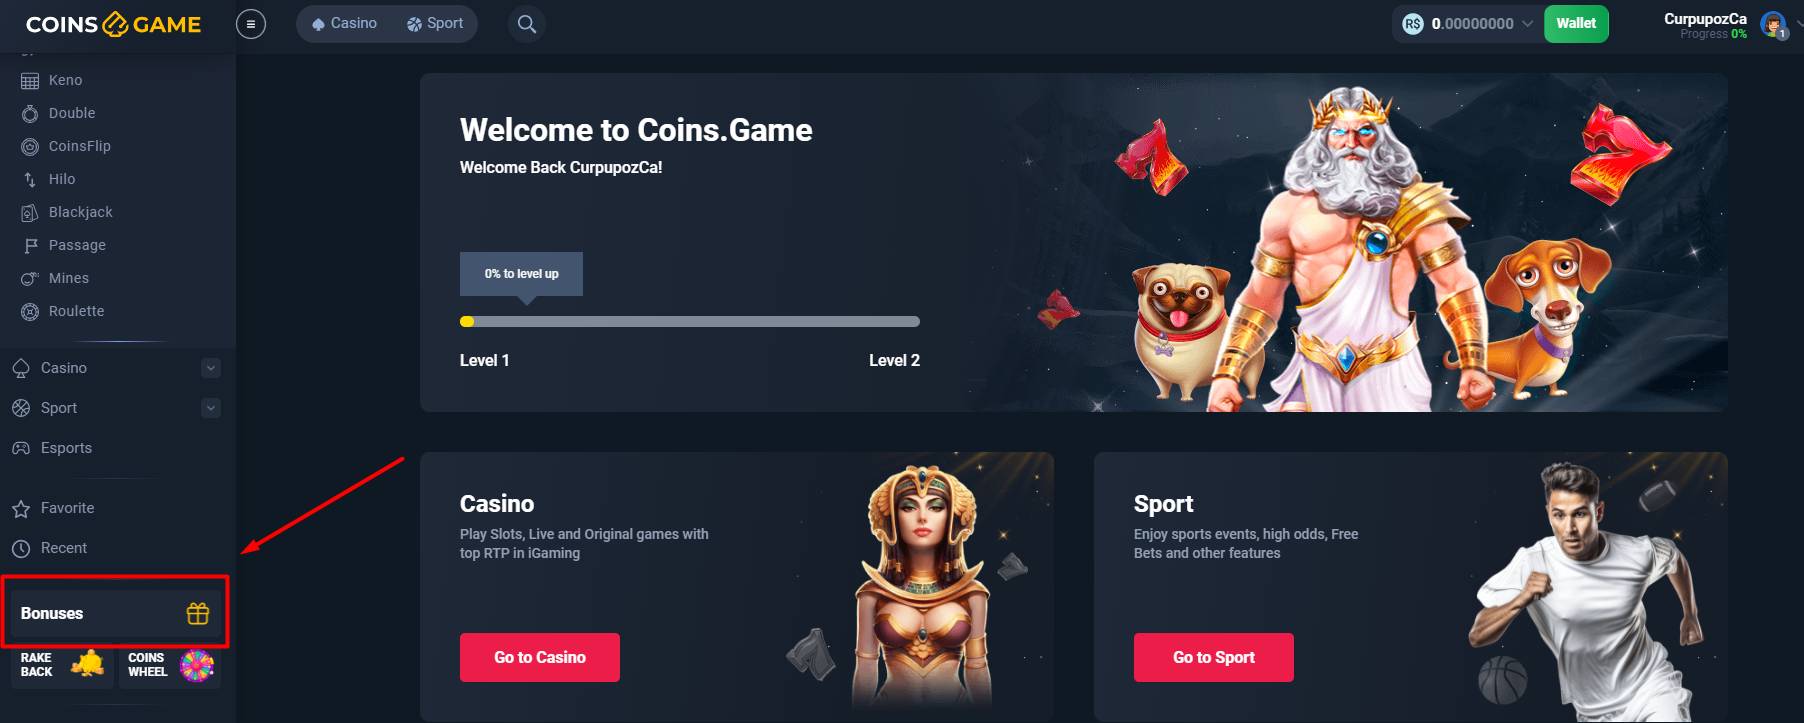 coins.game casino bonus section